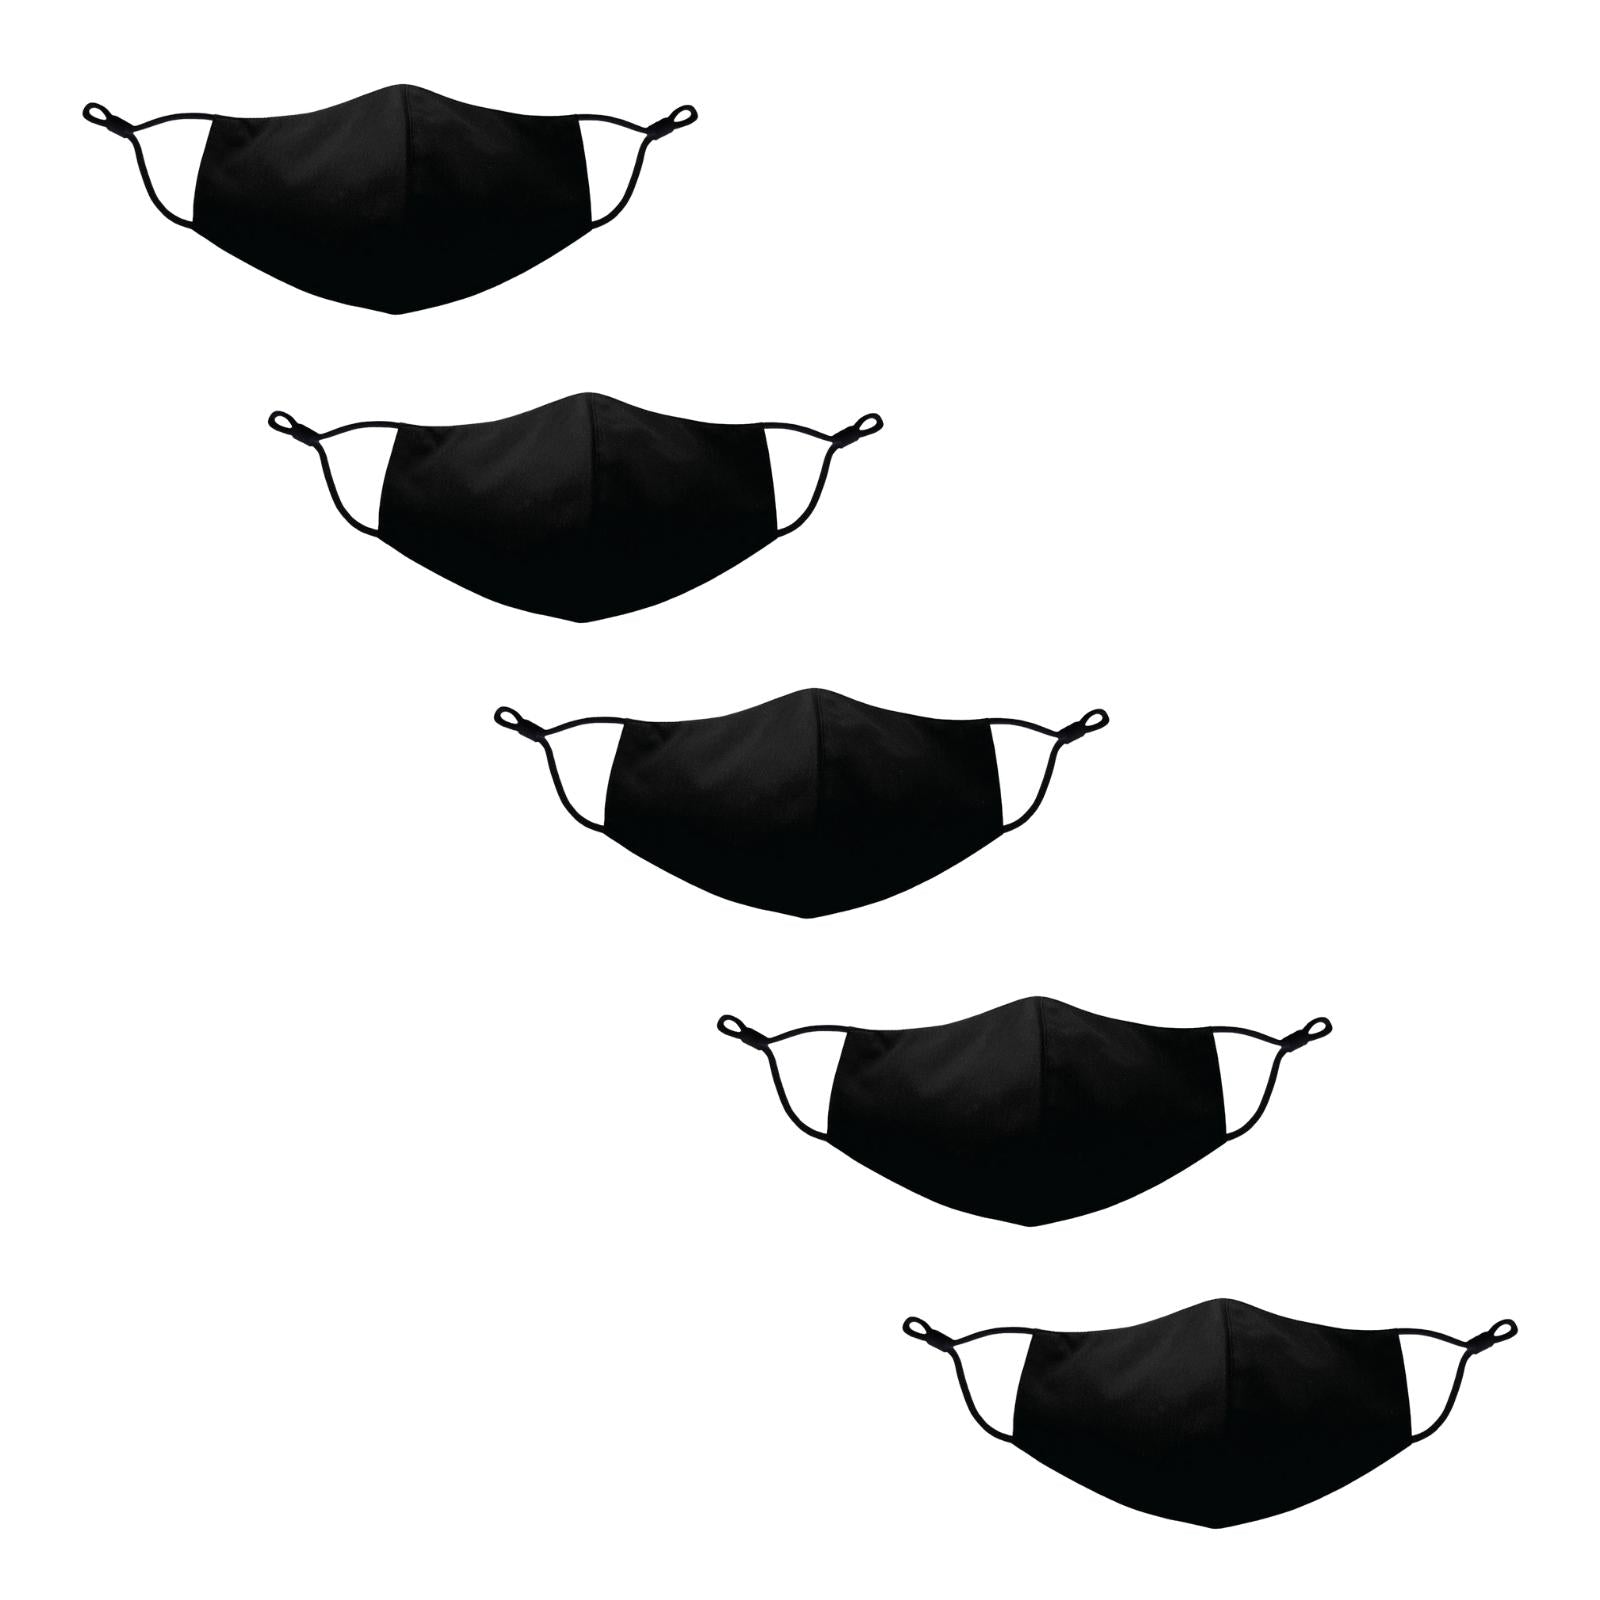 5 Pack of Plain Black Masks